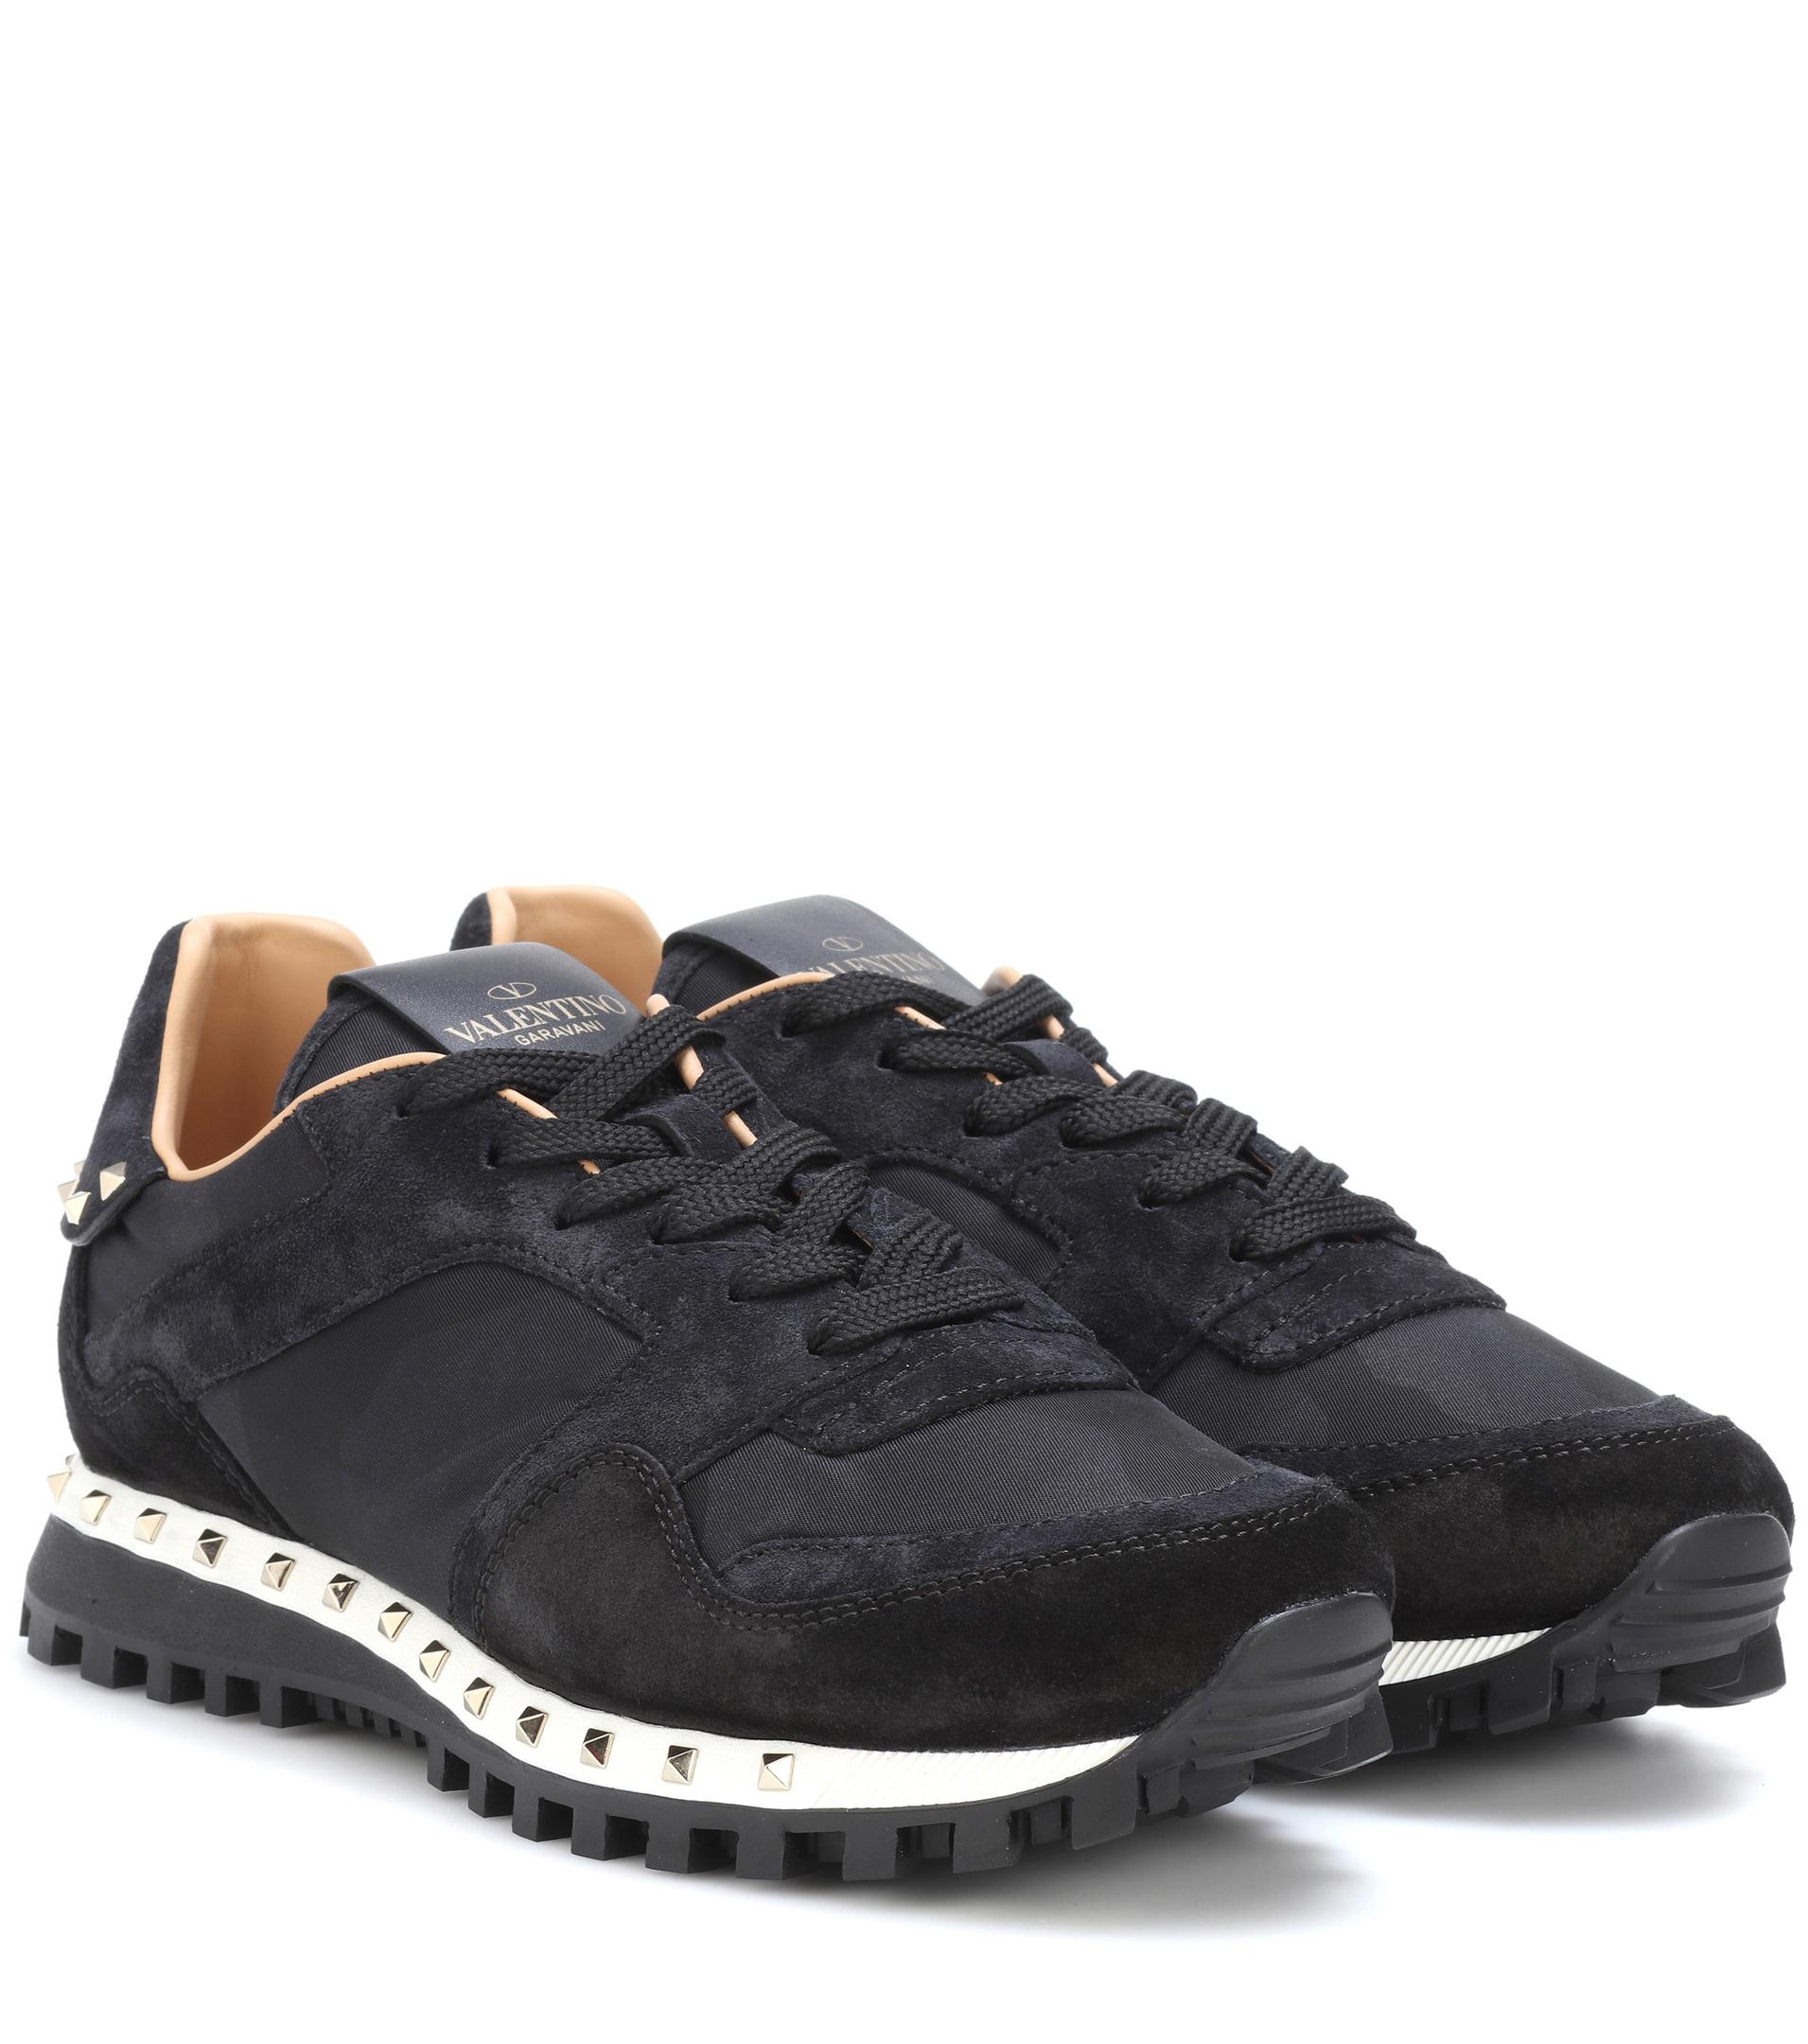 Valentino Garavani Leather Studded Printed Sneakers in Nero (Black) - Lyst